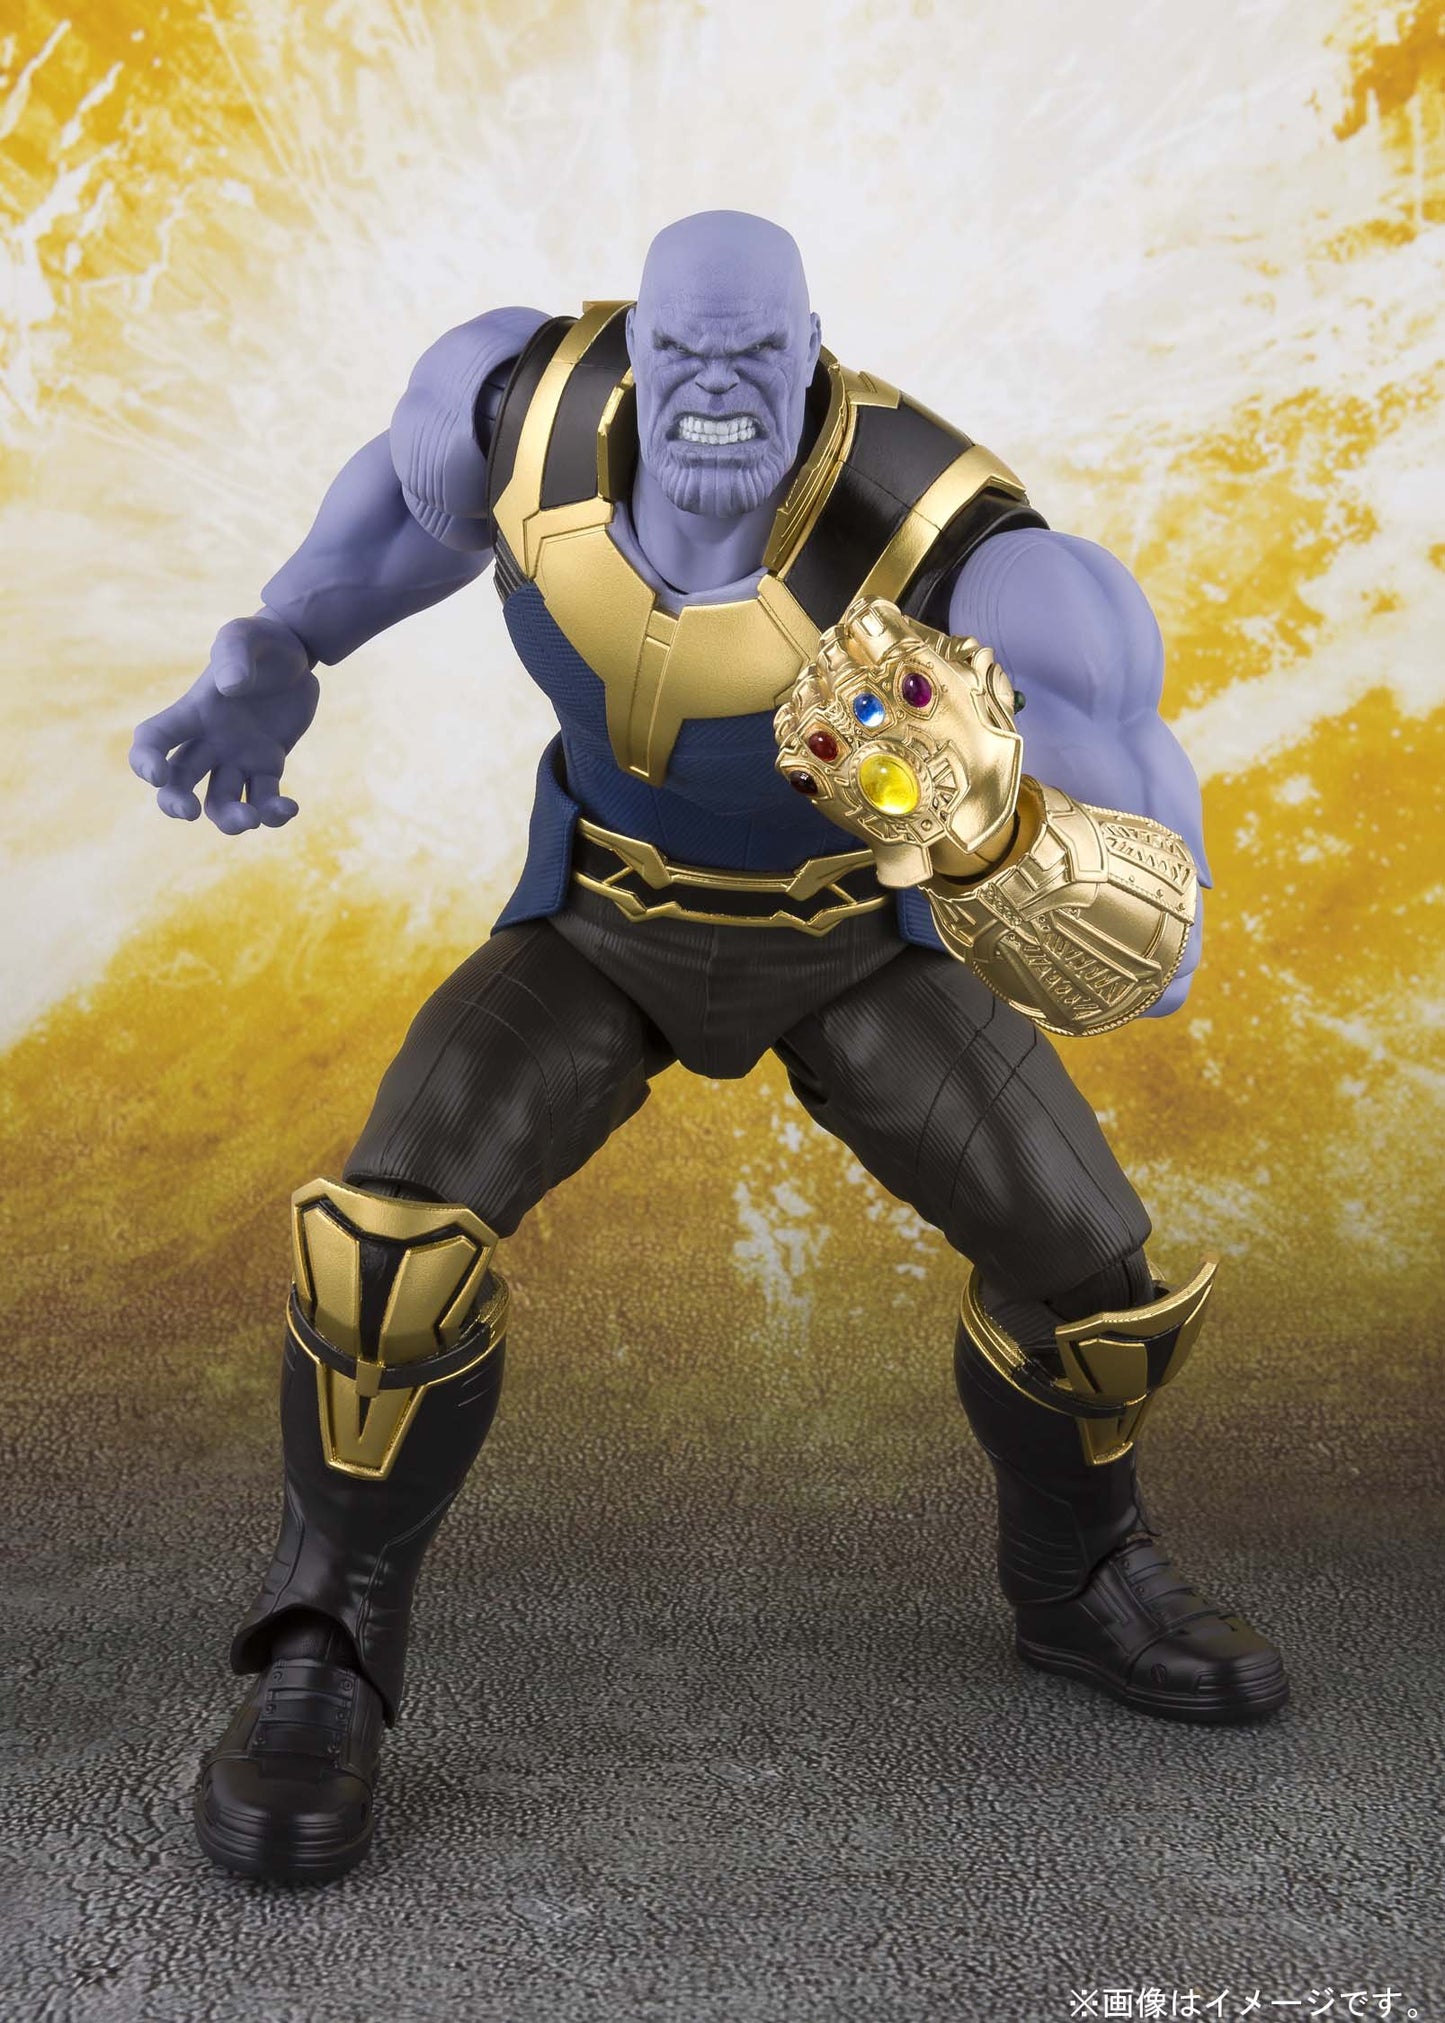 Bandai Tamashii Nations S.H. Figuarts Thanos Avengers: Infinity War Action Figure